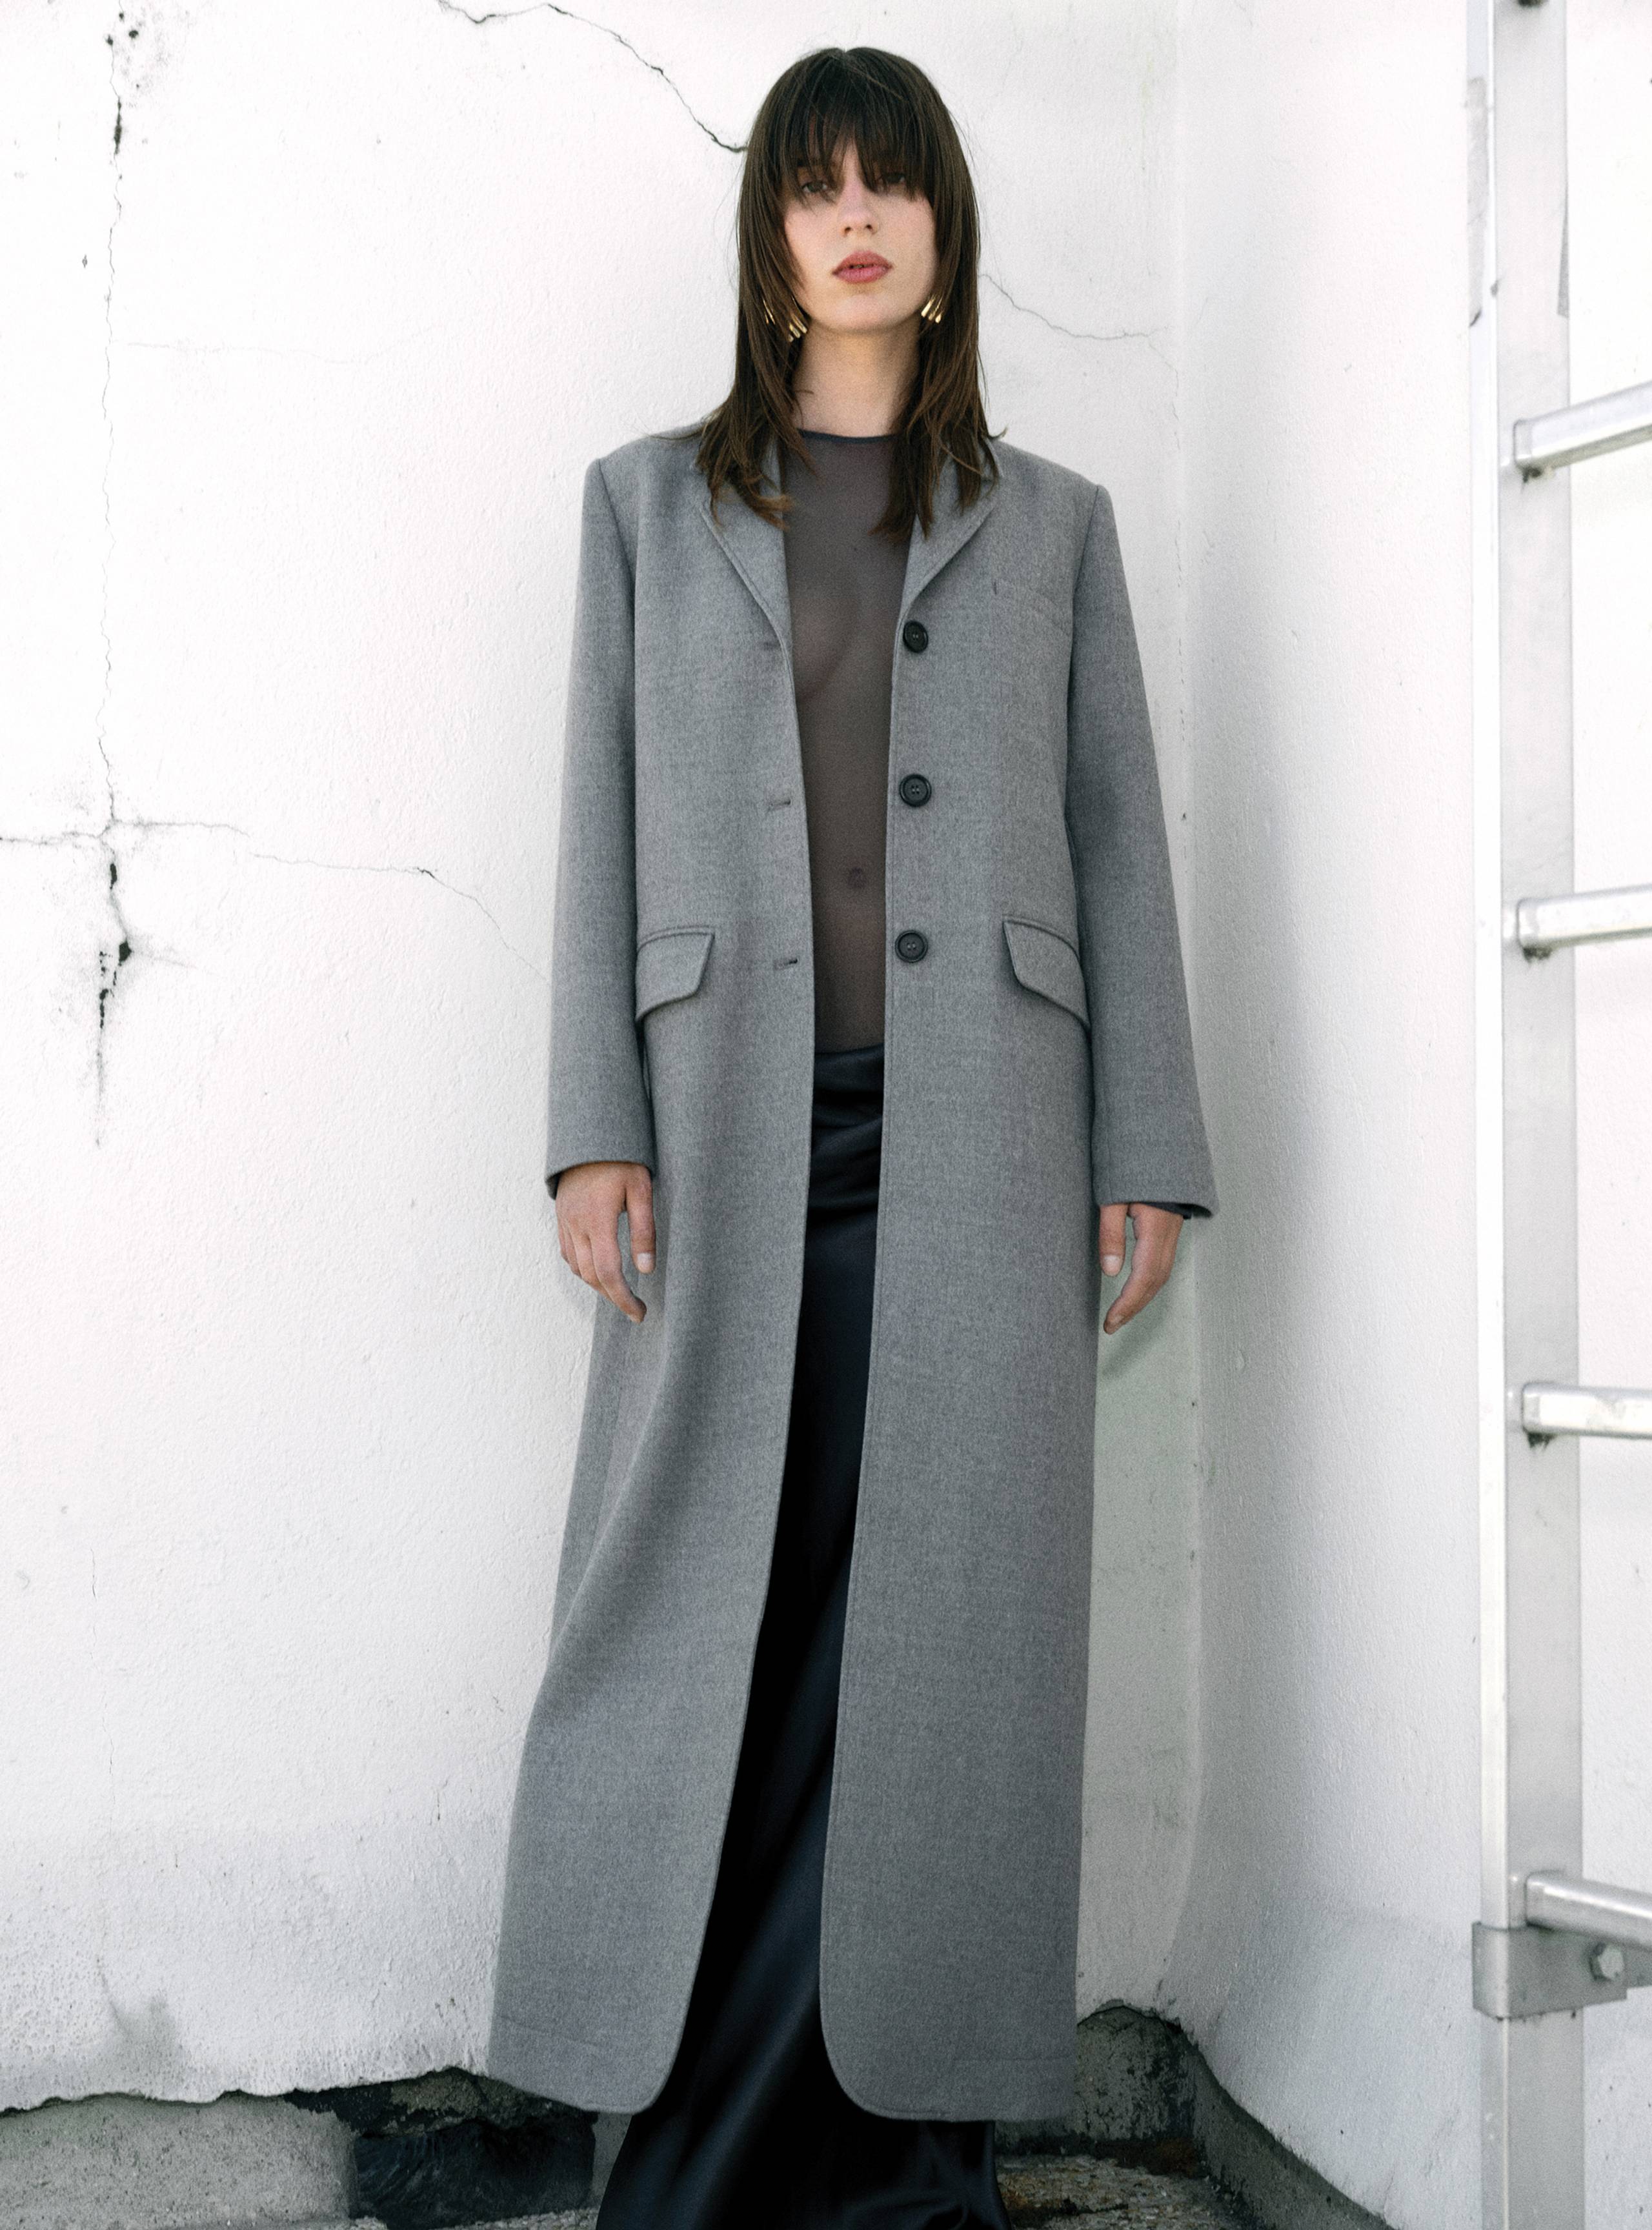 A model standing straight wearing the Celine Light Grey long suit coat